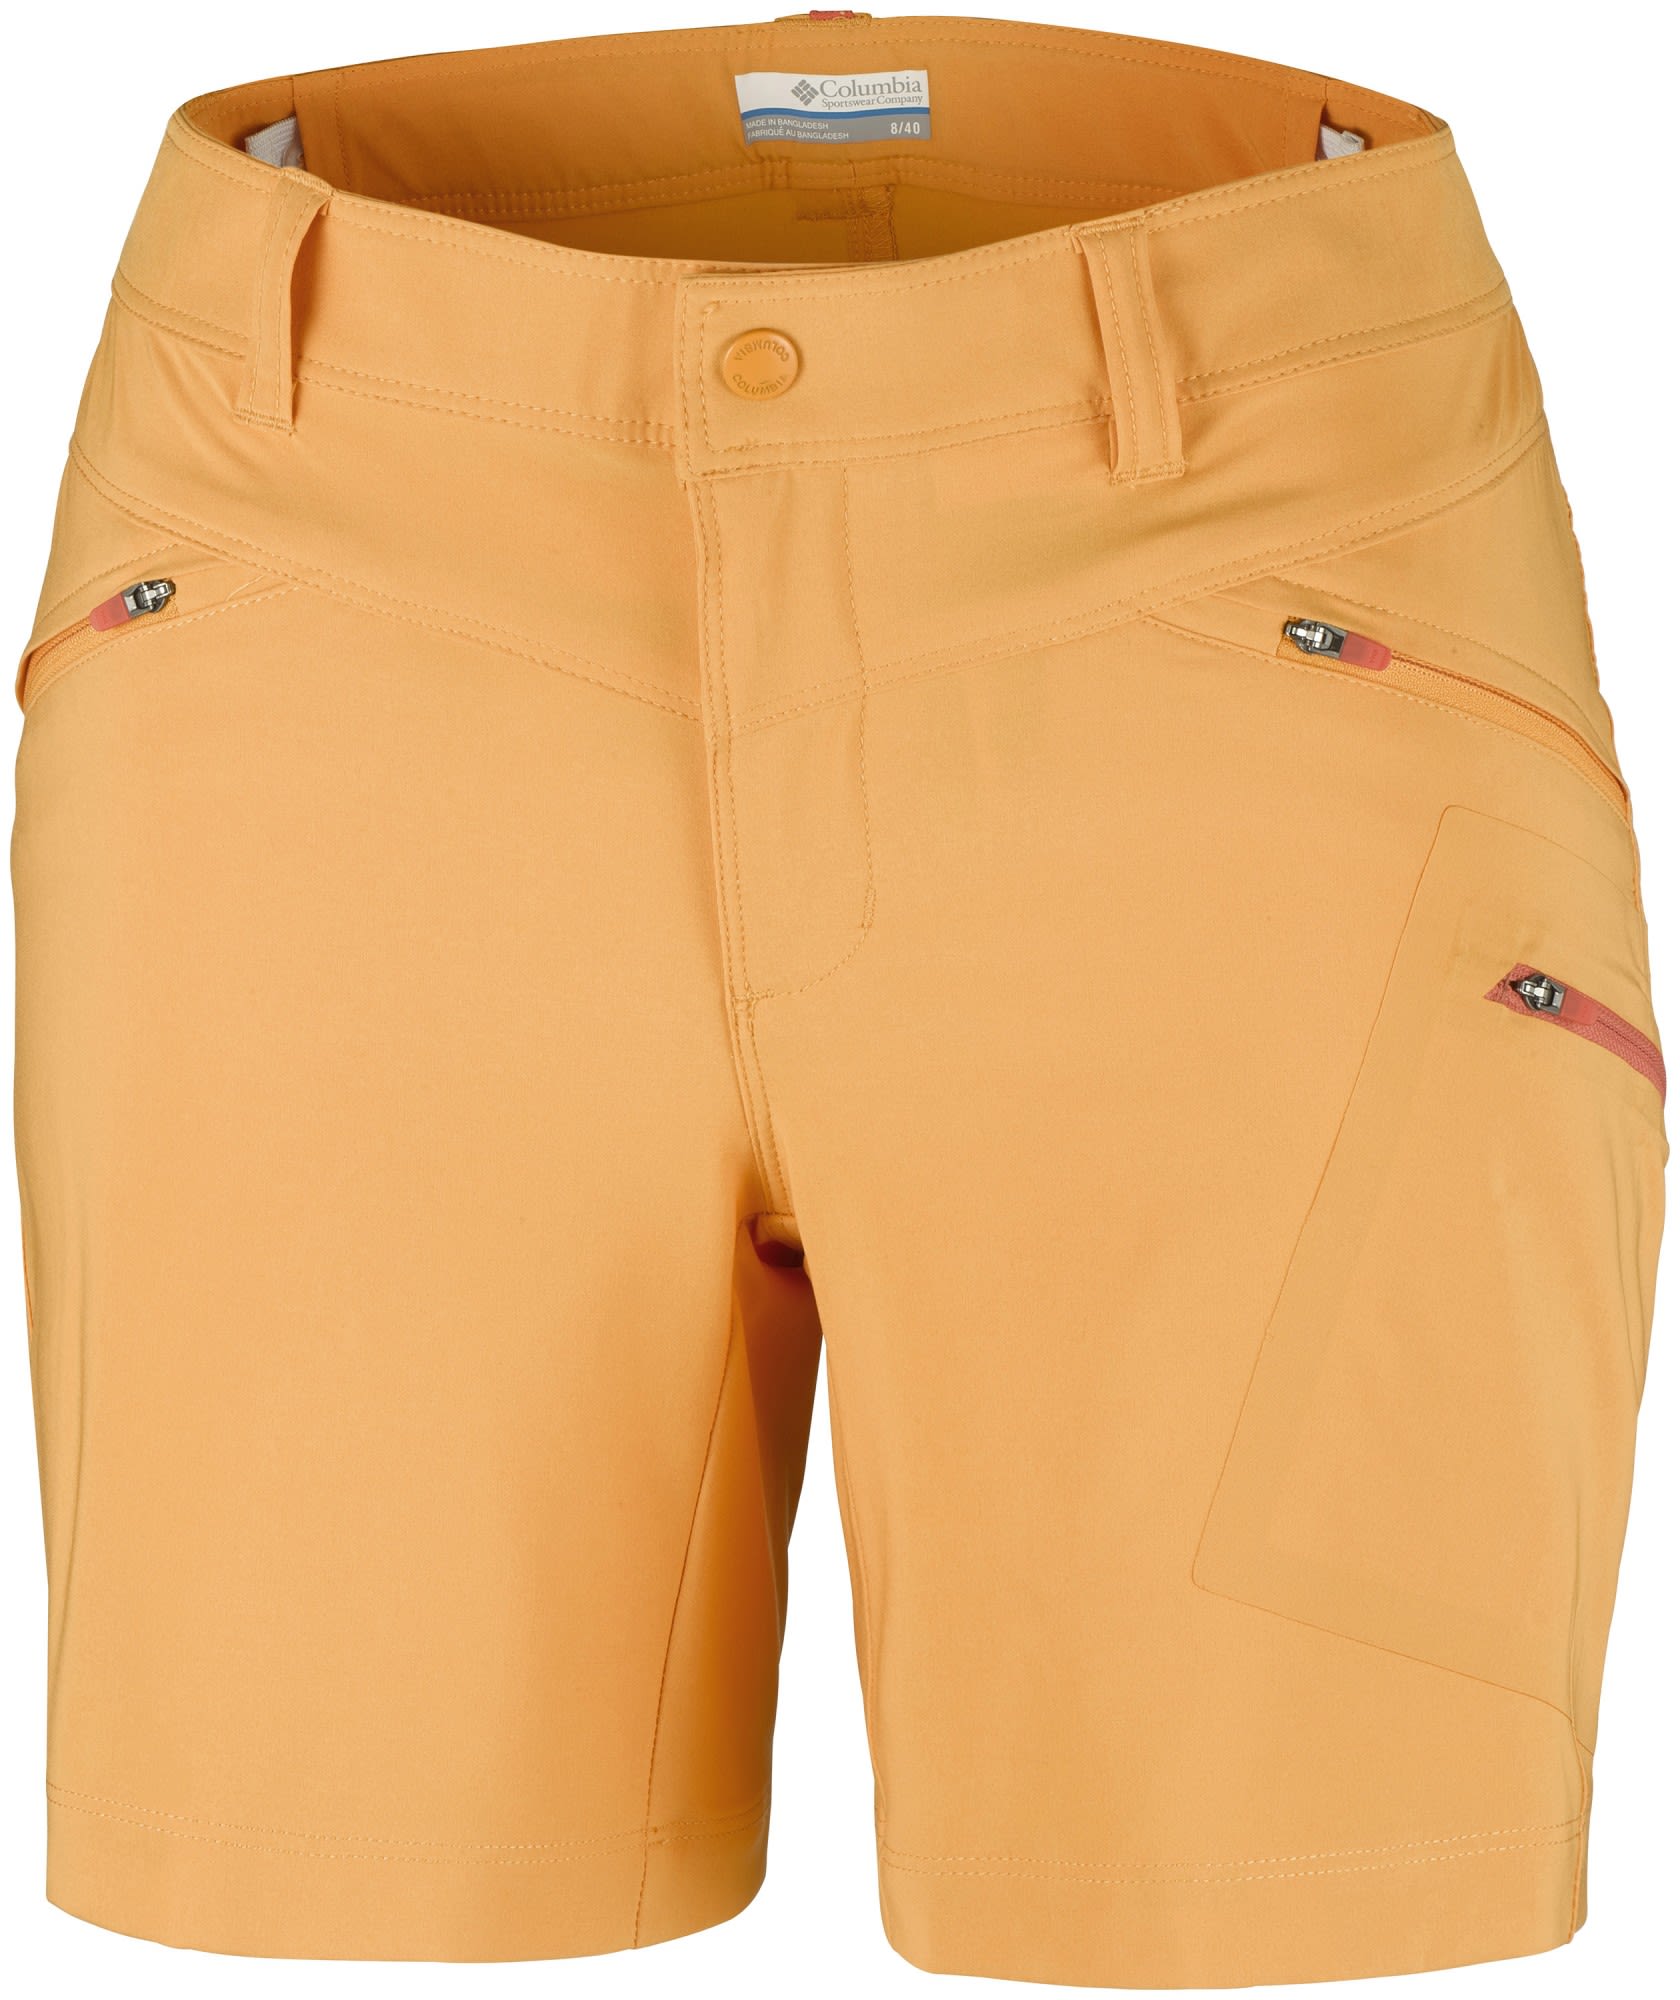 Columbia Peak TO Point Short (Vorgngermodell) Orange- Female Shorts- Grsse 4 - 8 - Farbe Summer Orange unter Columbia